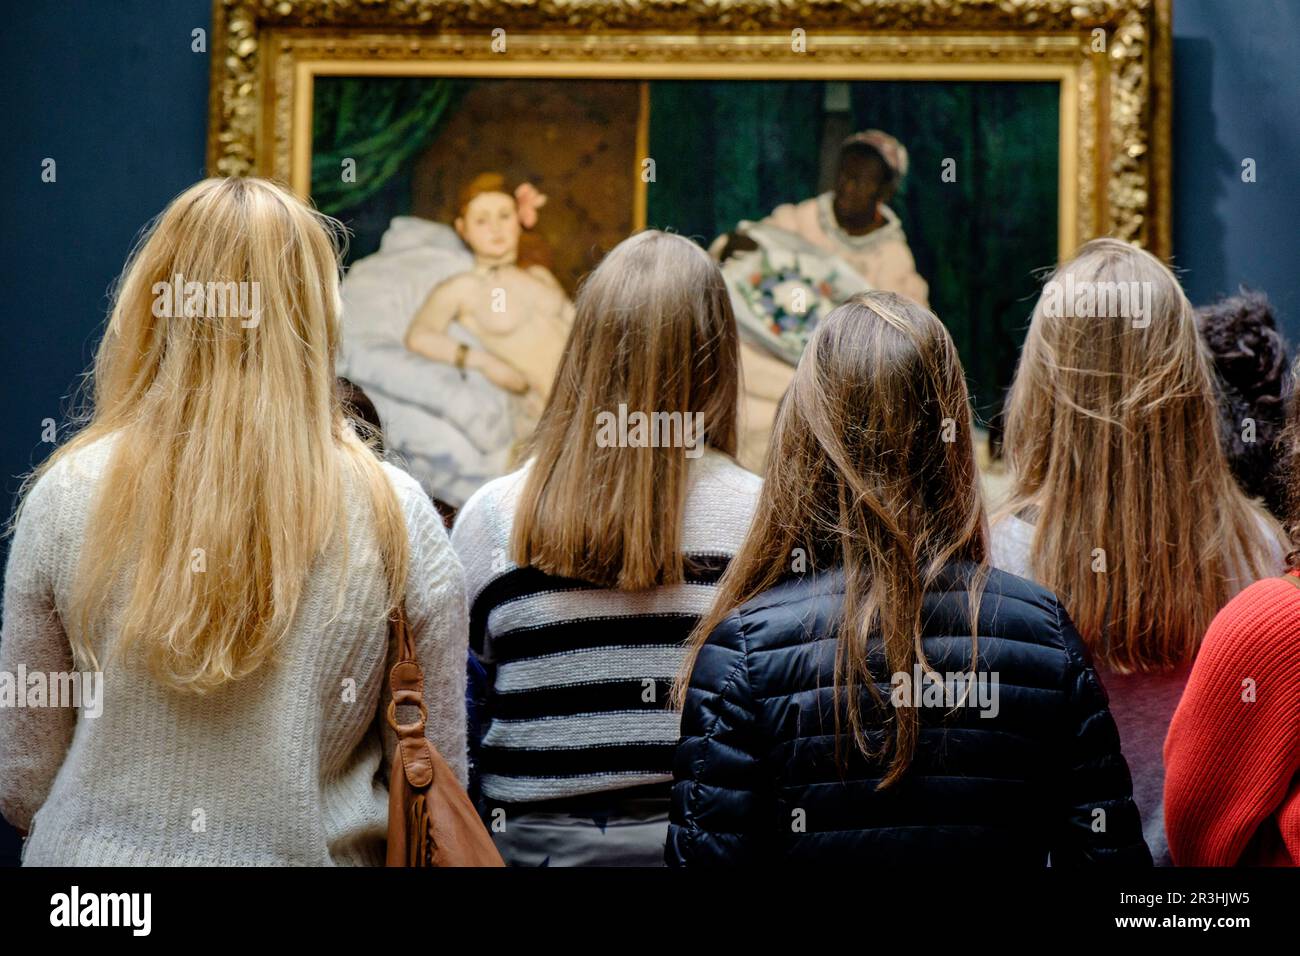 Edouard Manet (1832-1883),. Olympia,. 1863,. Óleo sobre lienzo, Museo de Orsay, Ministerio de Cultura y Comunicación Francés, Paris, France,Western Europe. Stock Photo